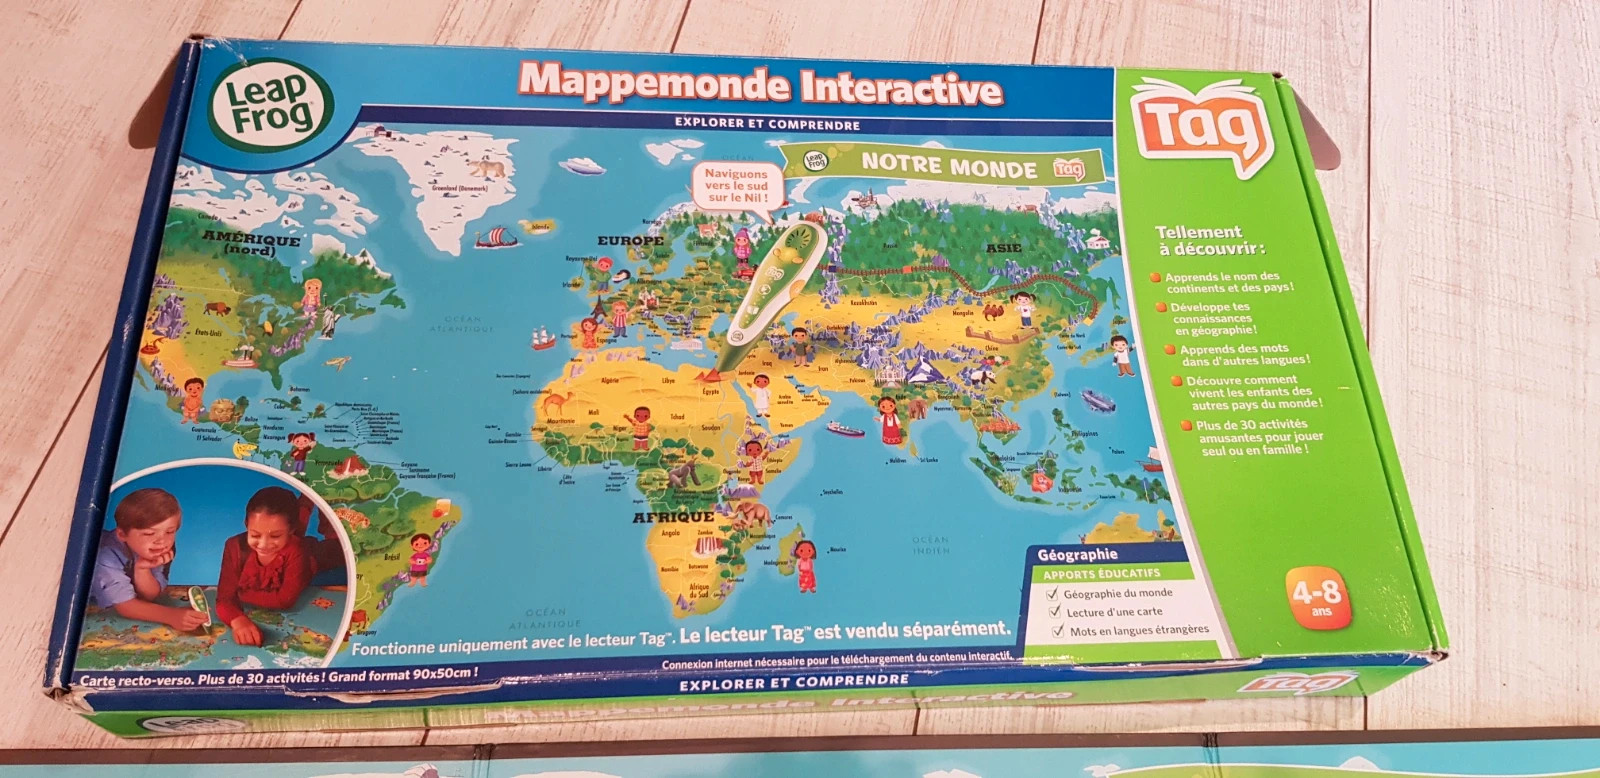 Leapfrog Tag Mappemonde Interactive - Livre interactif - Achat